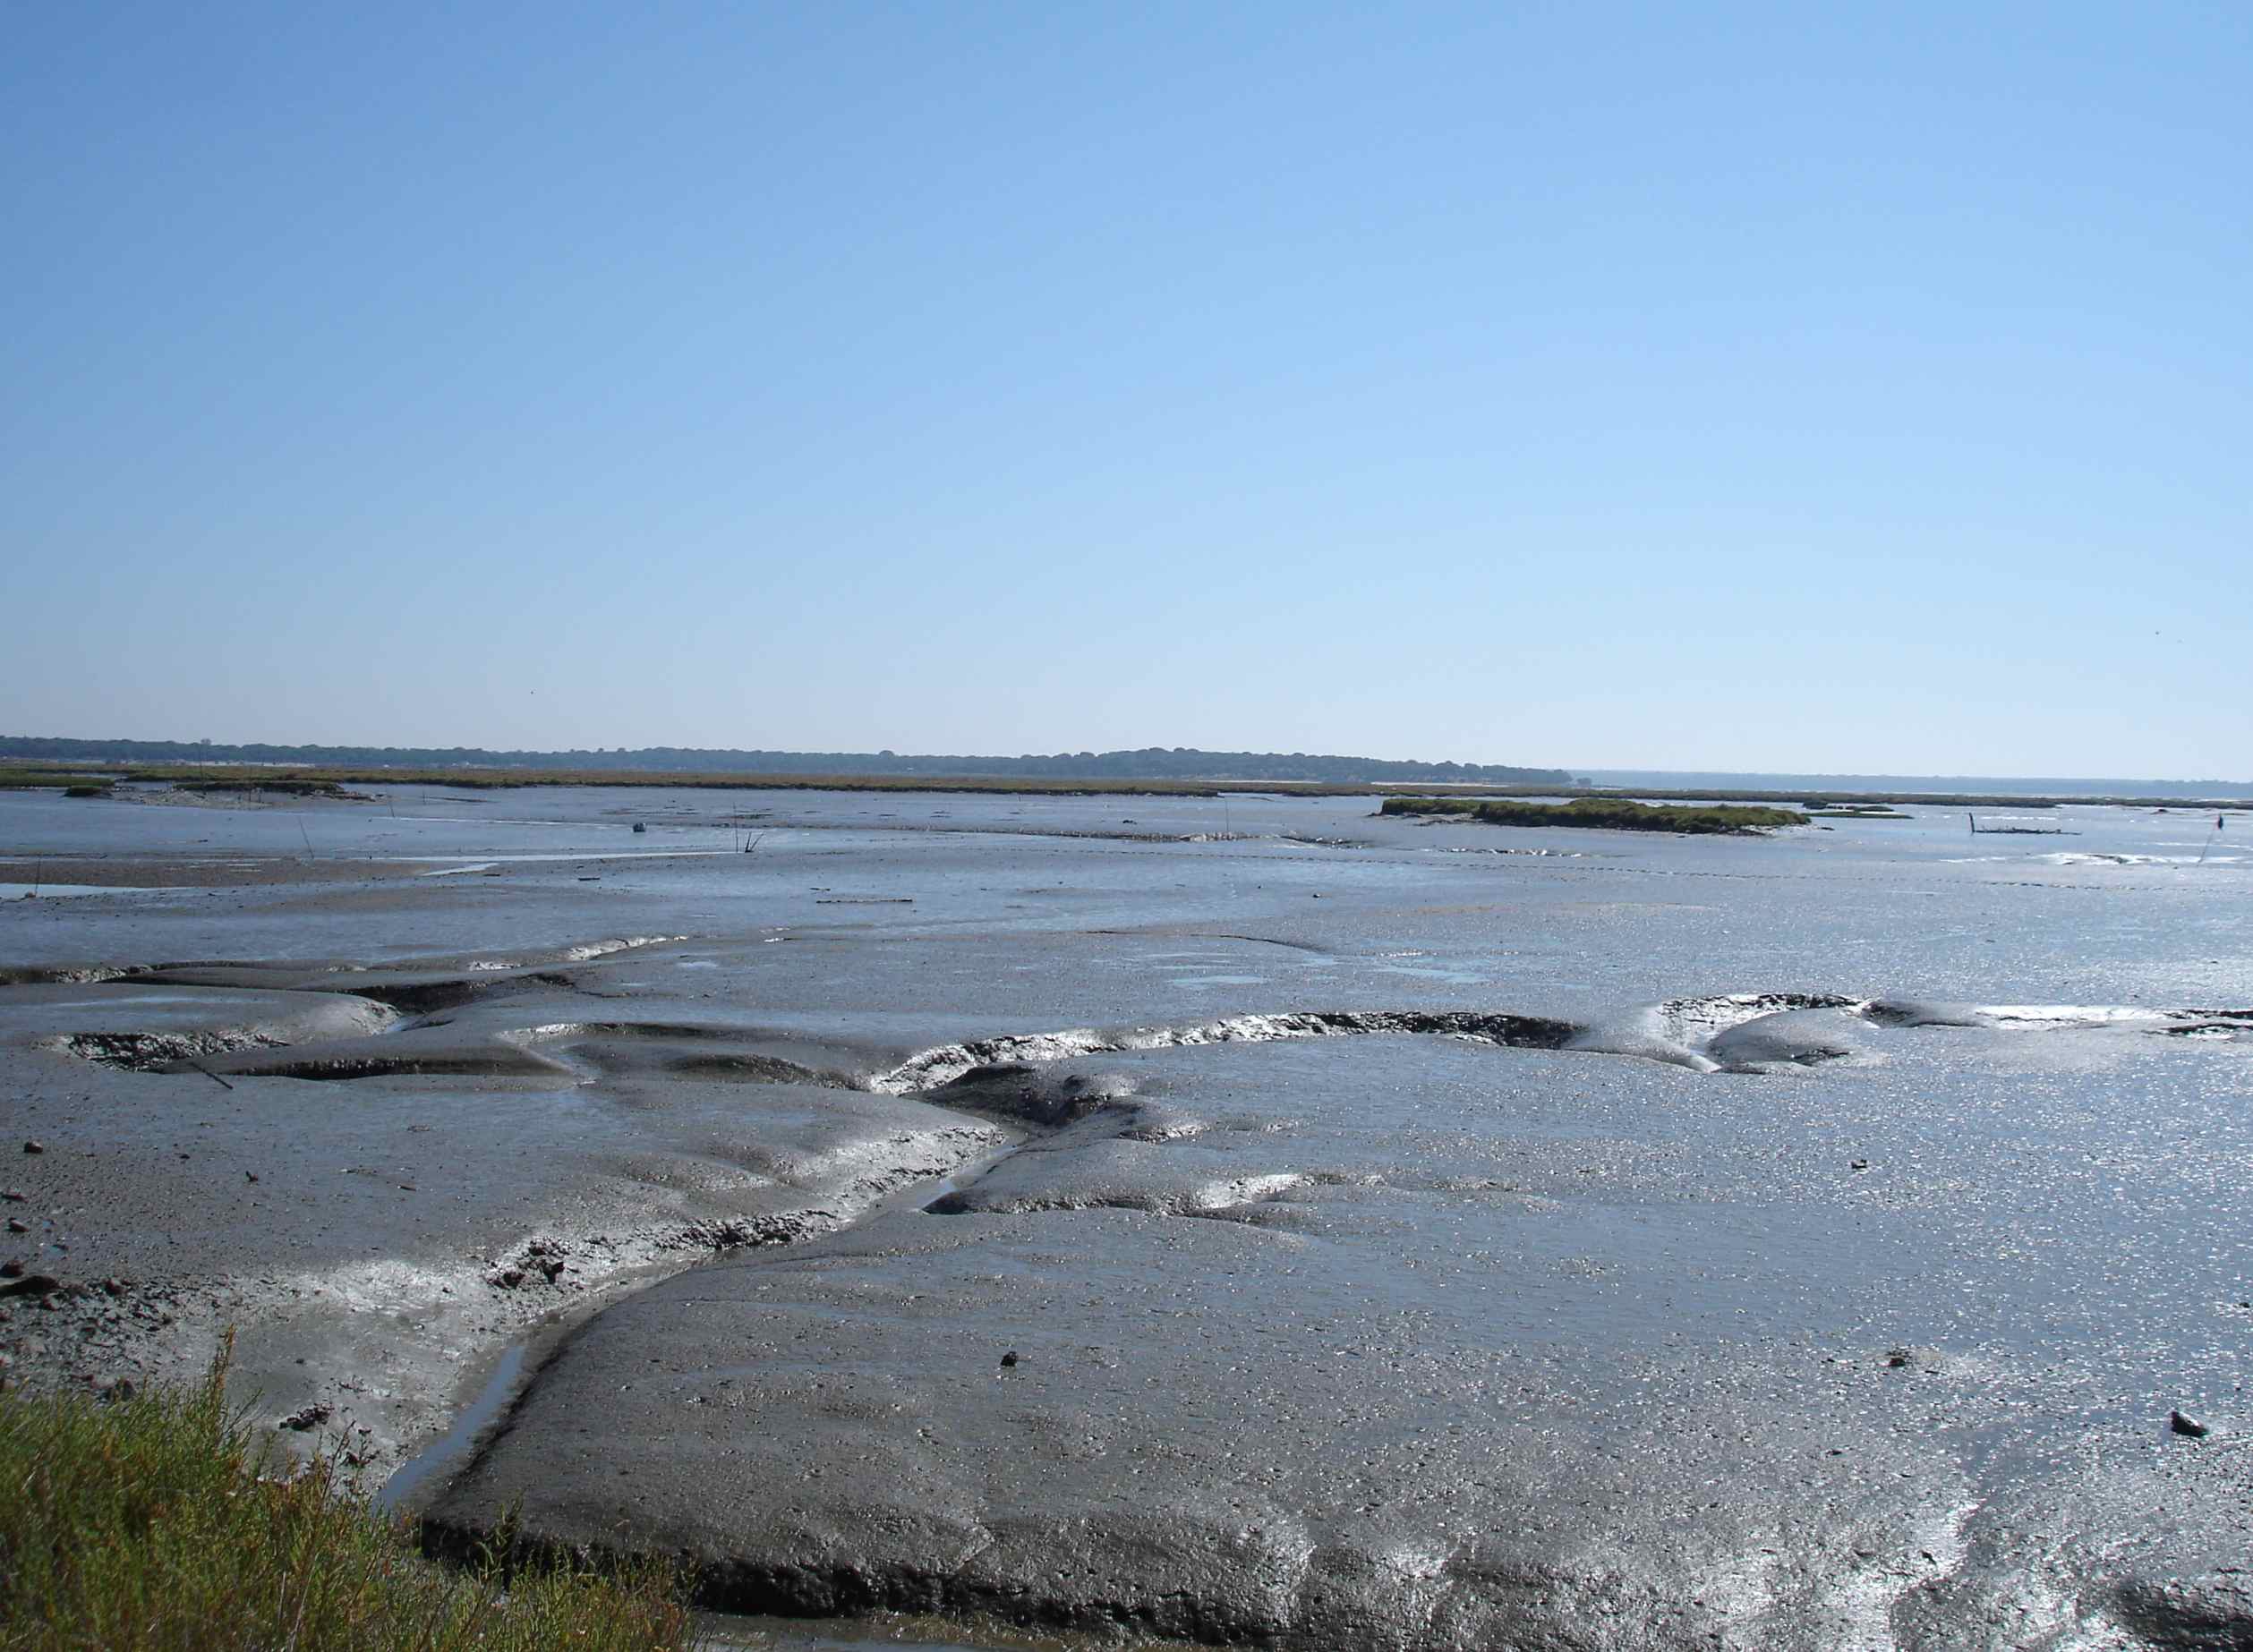 Figure 102F - Present day mud flats rich in burrowing animals (Sado River Estuary, Portugal).